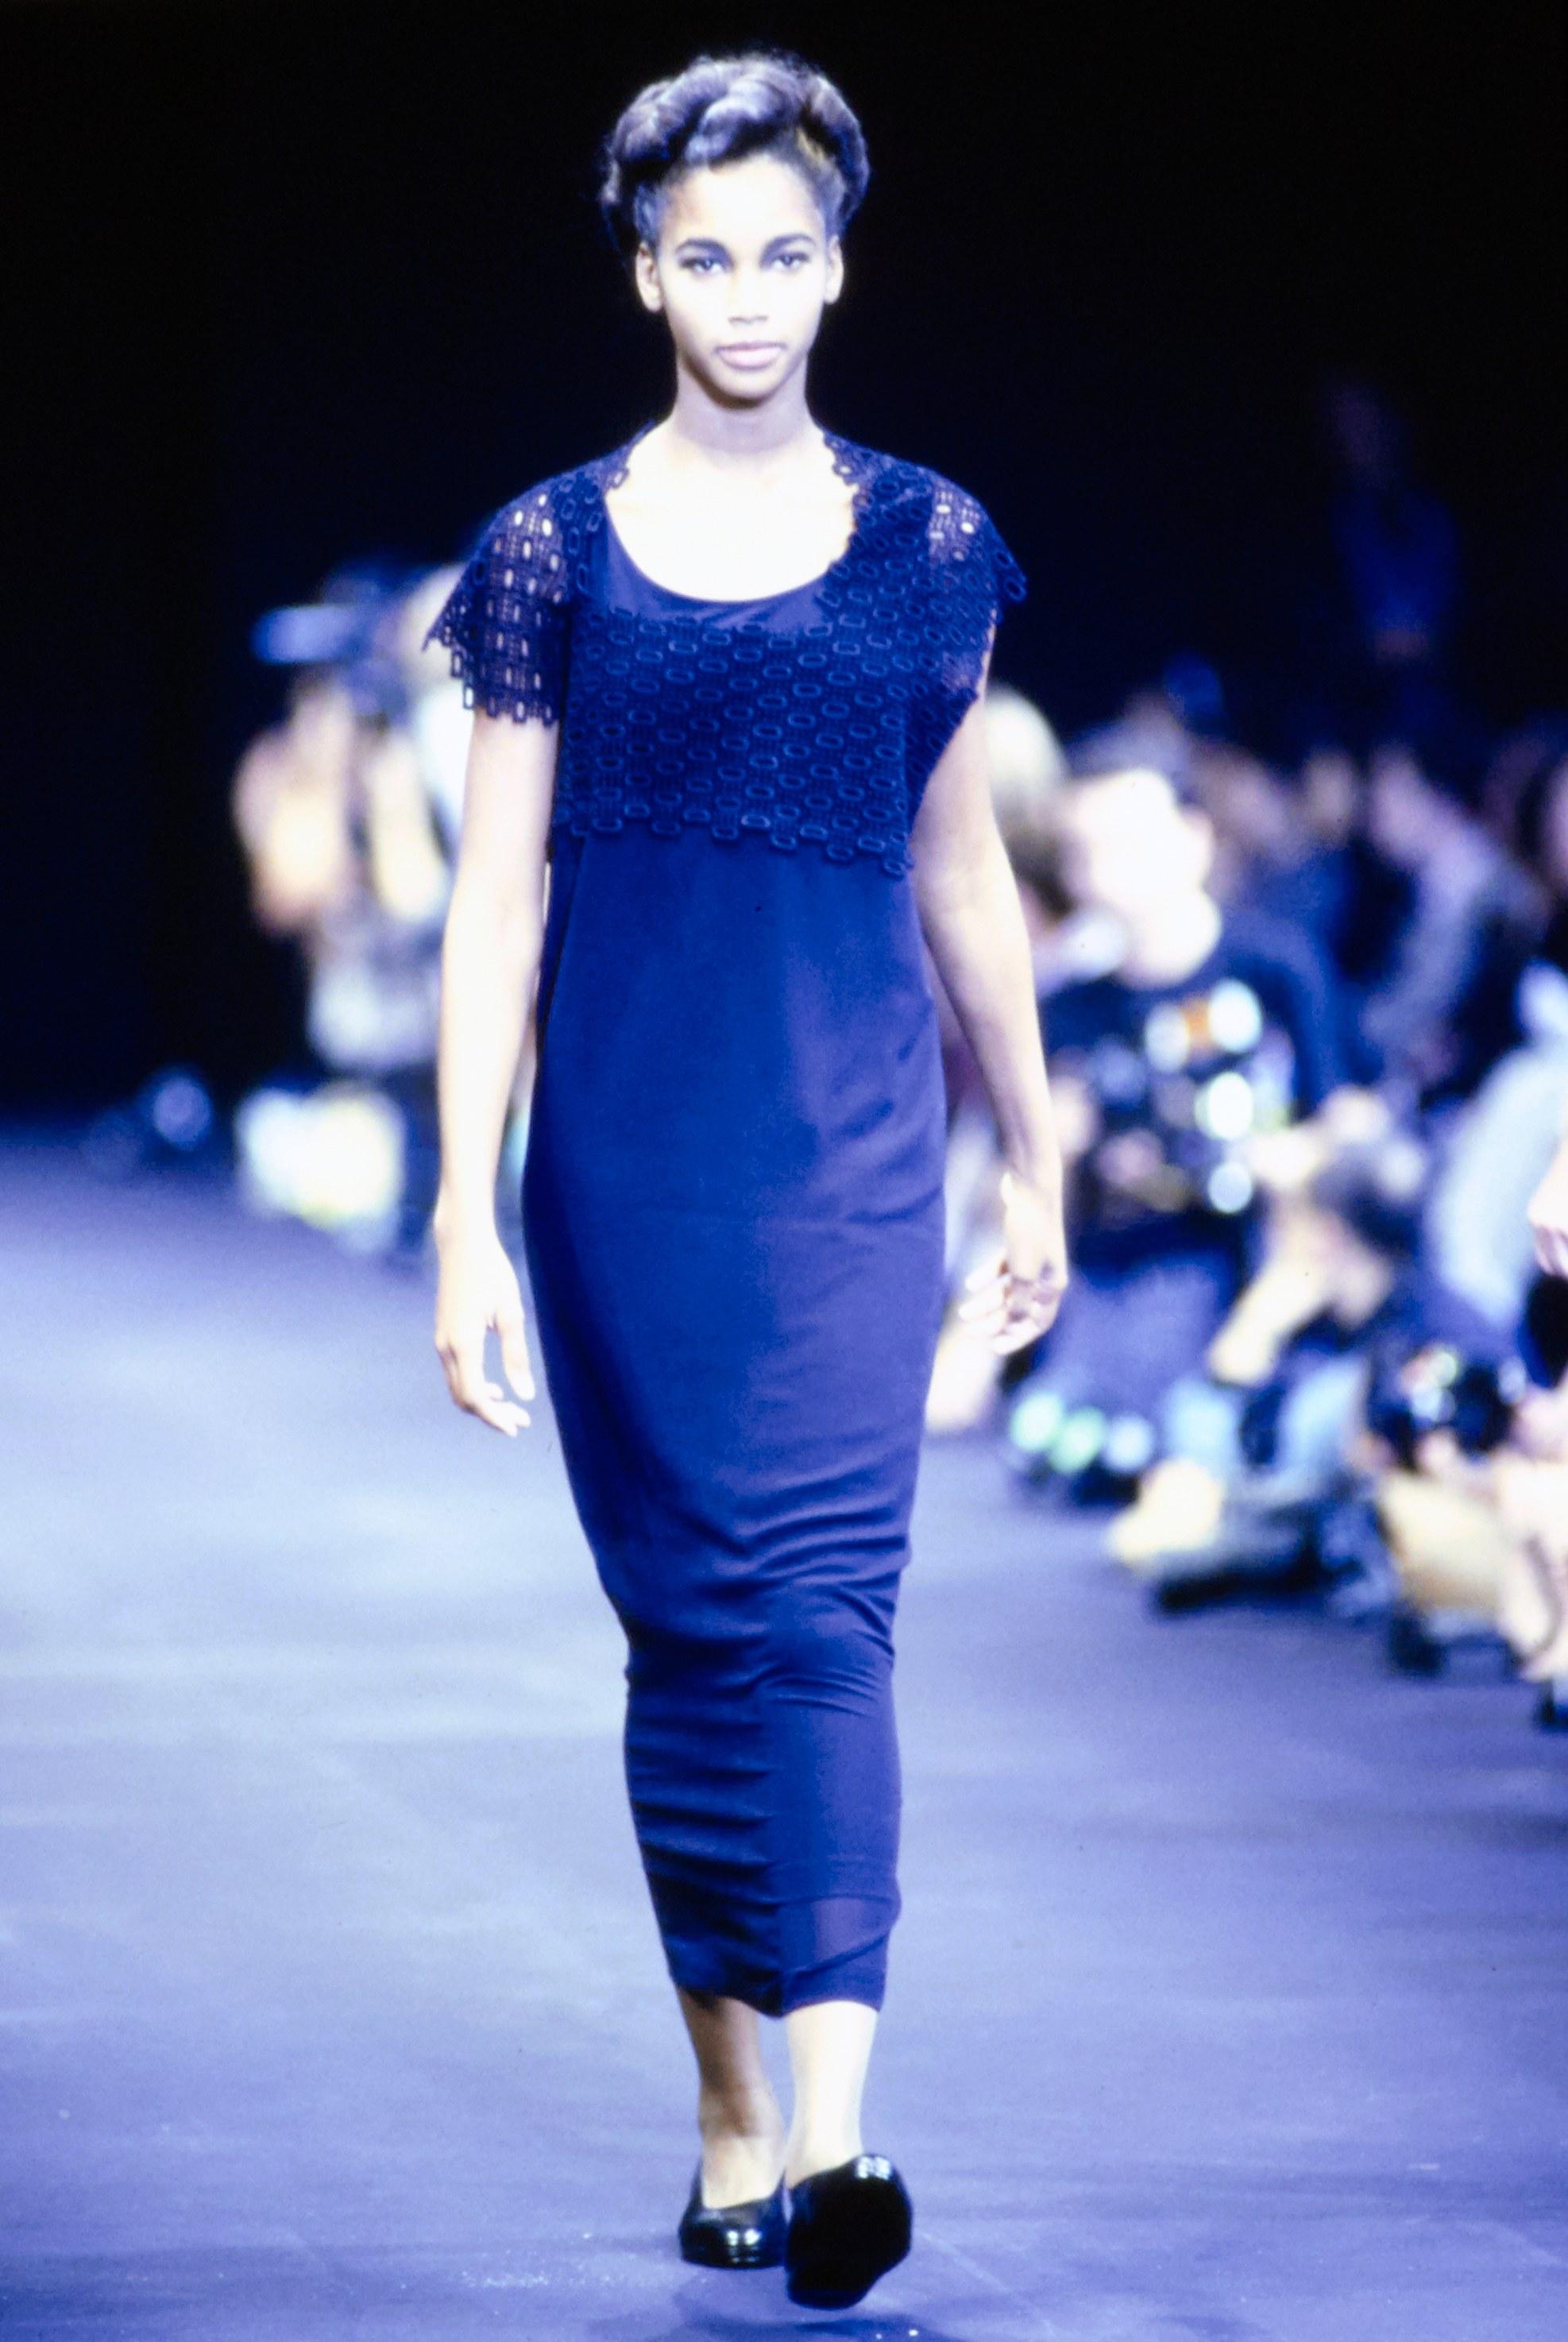 Comme des Garcons 1990 Collection
Plain Slip Dress and Asymmetric Over Dress
Labelled size M 